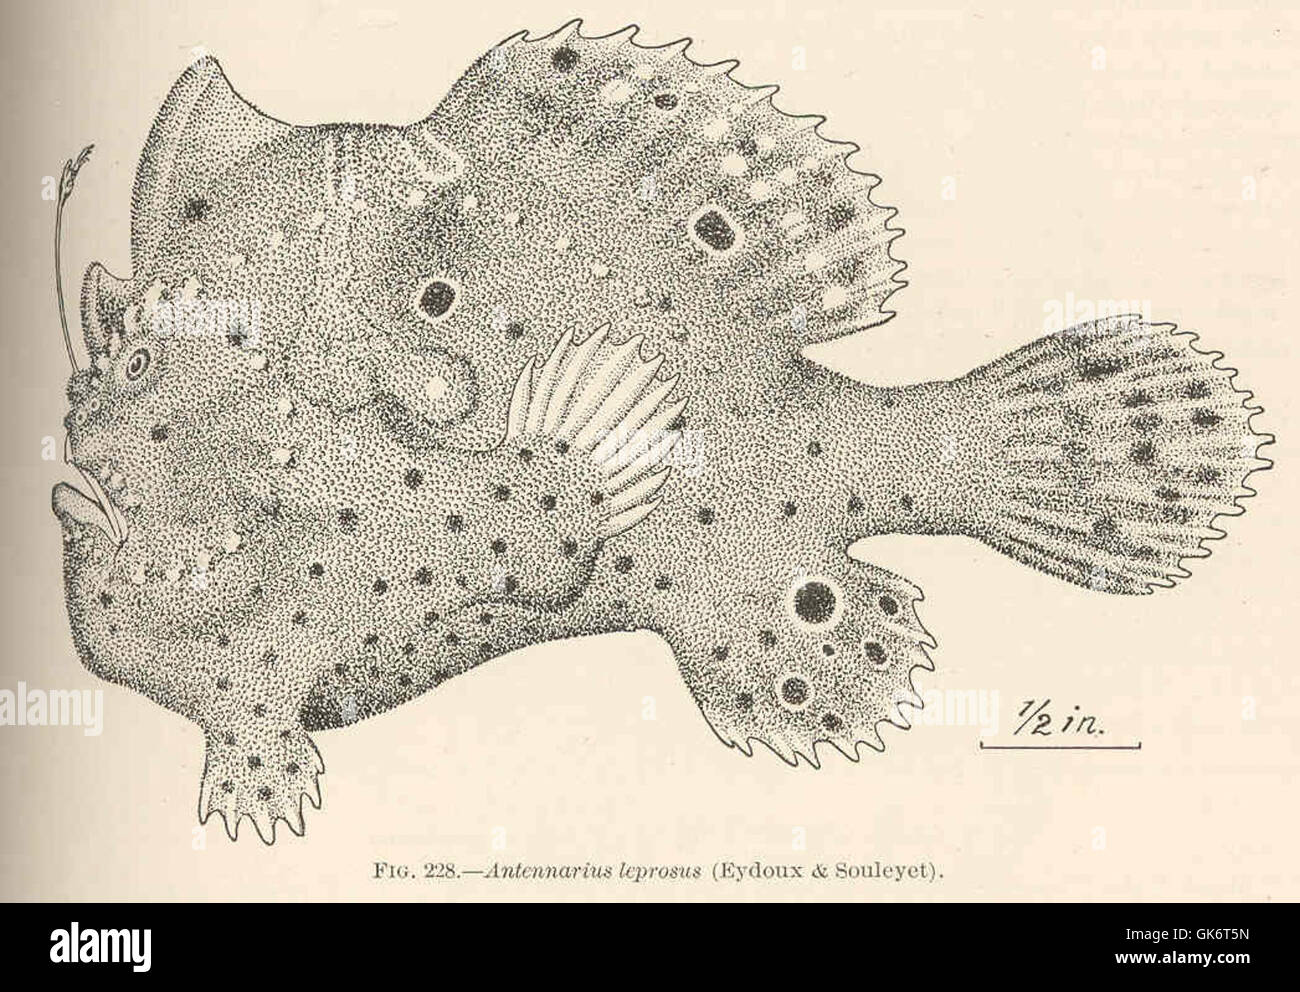 42591 Antennarius leprosus (Eydoux & Souleyet) Stock Photo